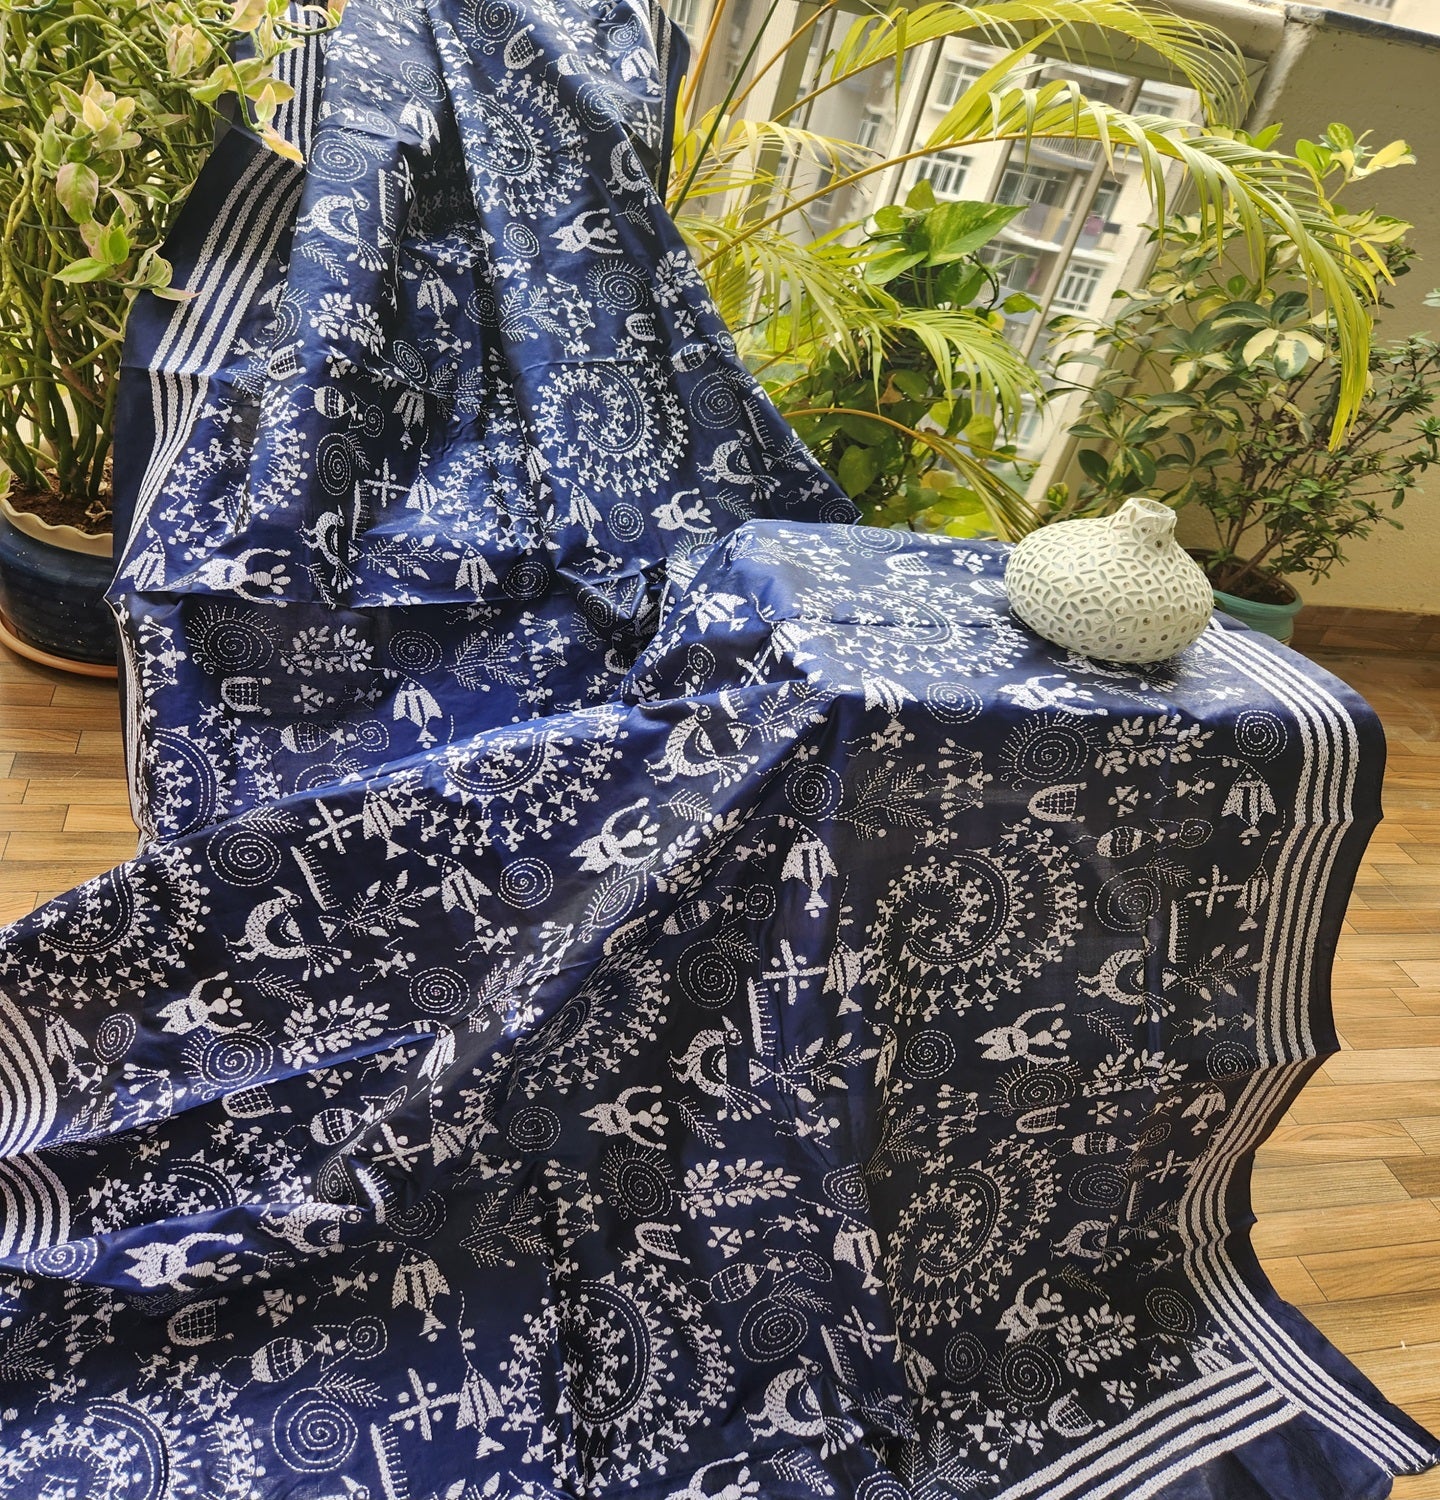 WARLI DUPATTA silk dupatta blue dupattaonline warli hand embroidery shekantha kantha dupatta